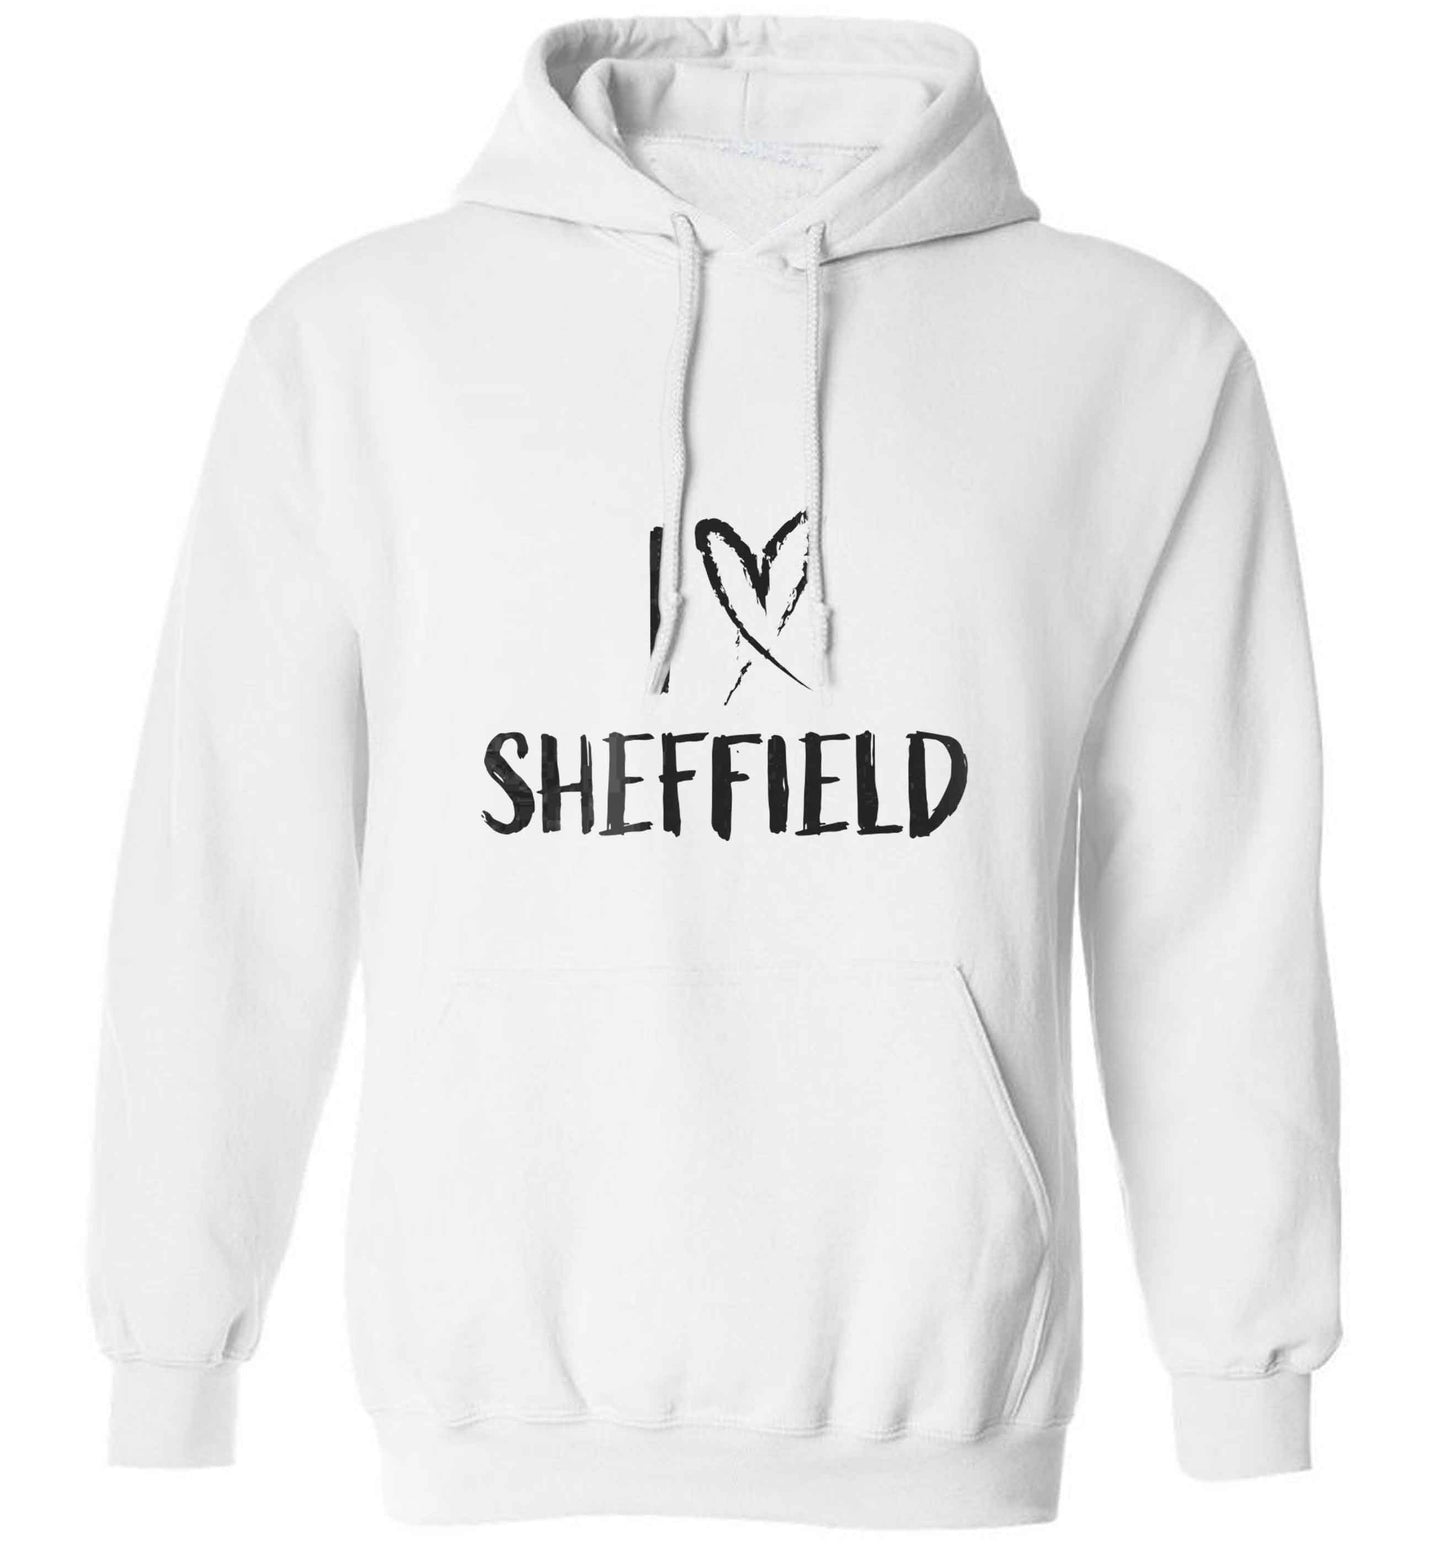 I love Sheffield adults unisex white hoodie 2XL